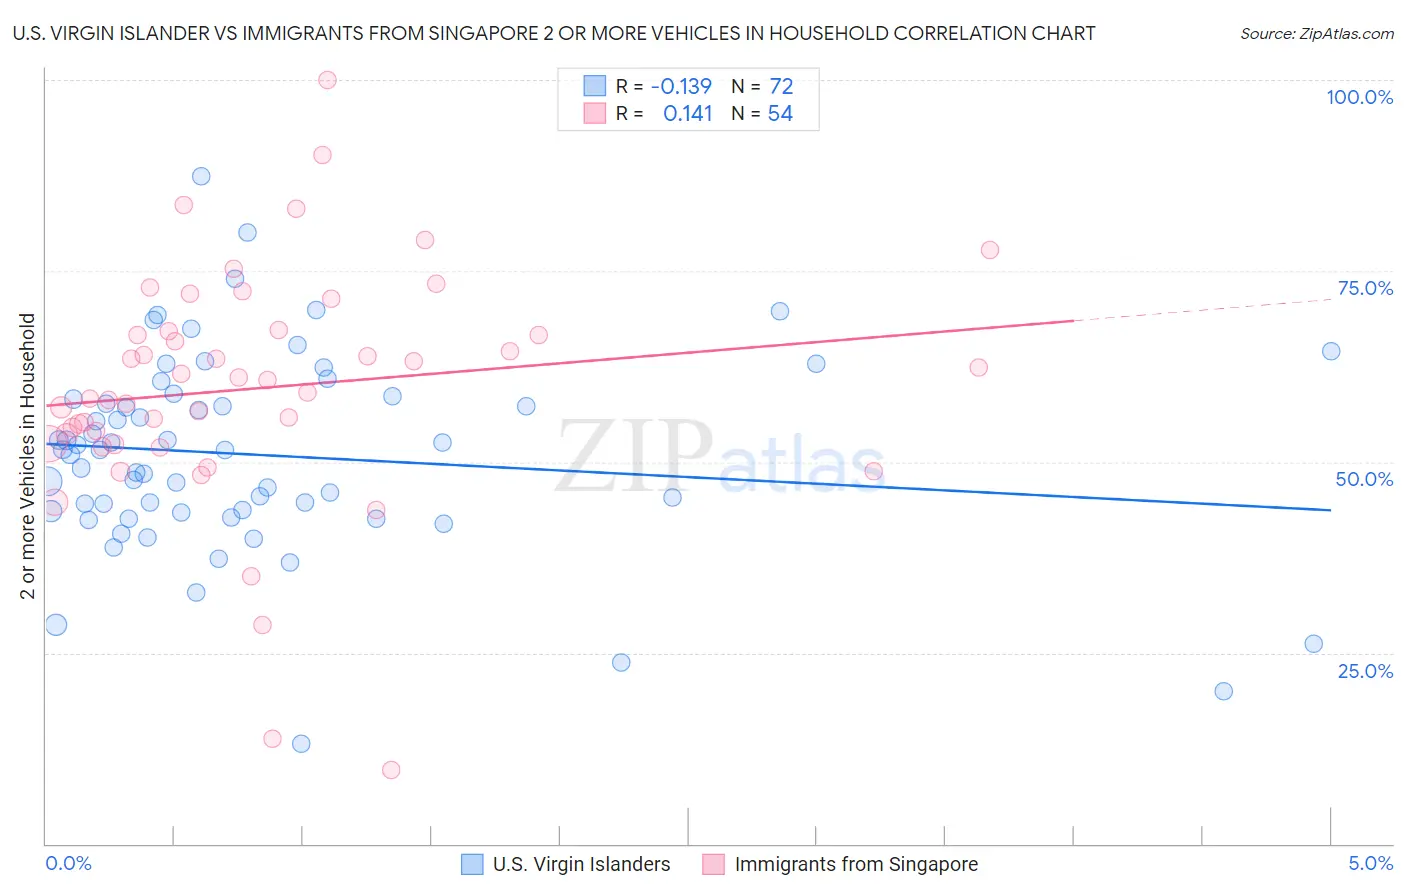 U.S. Virgin Islander vs Immigrants from Singapore 2 or more Vehicles in Household